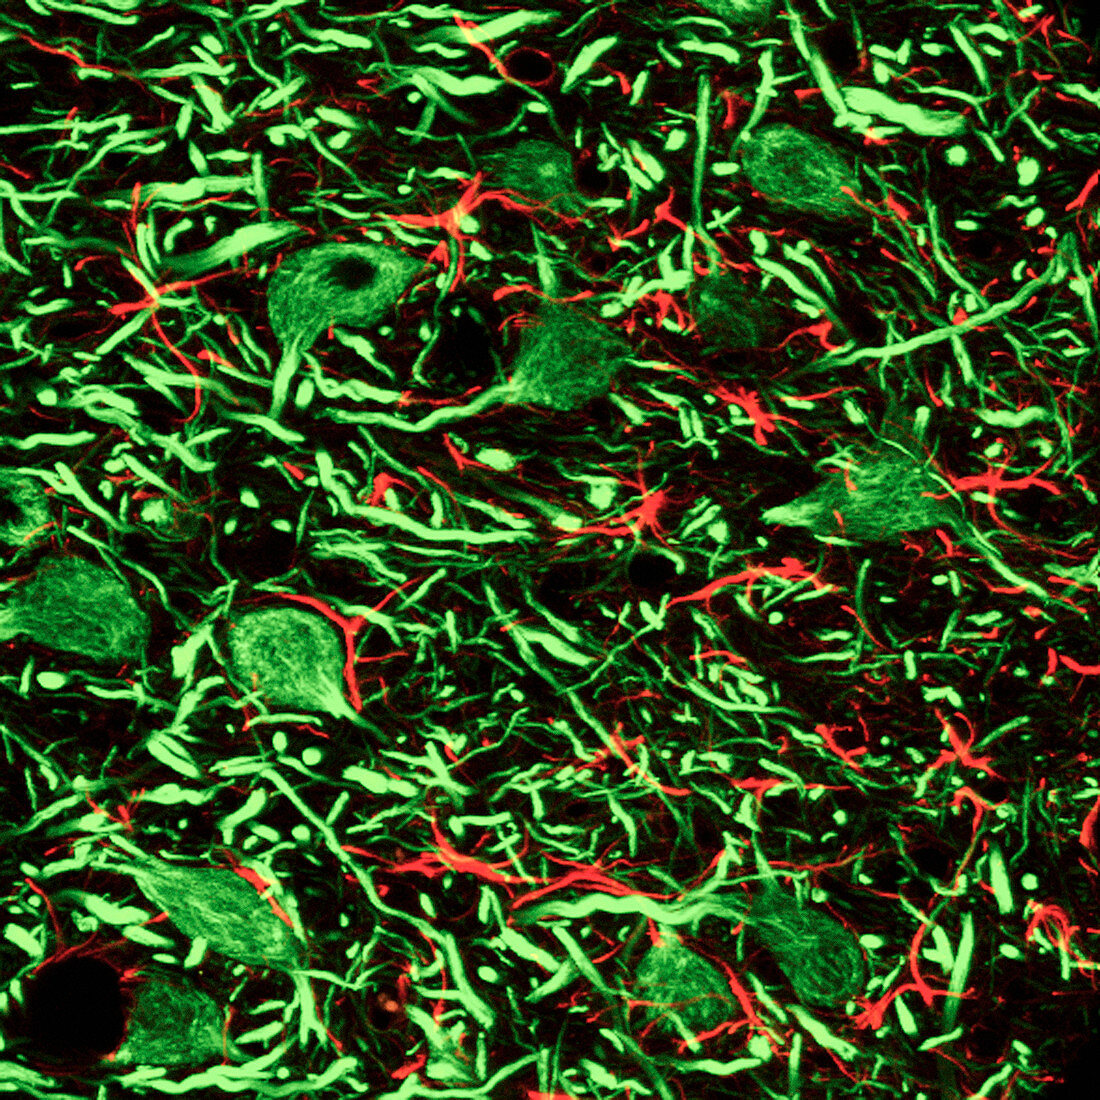 Thalamus nerve cells